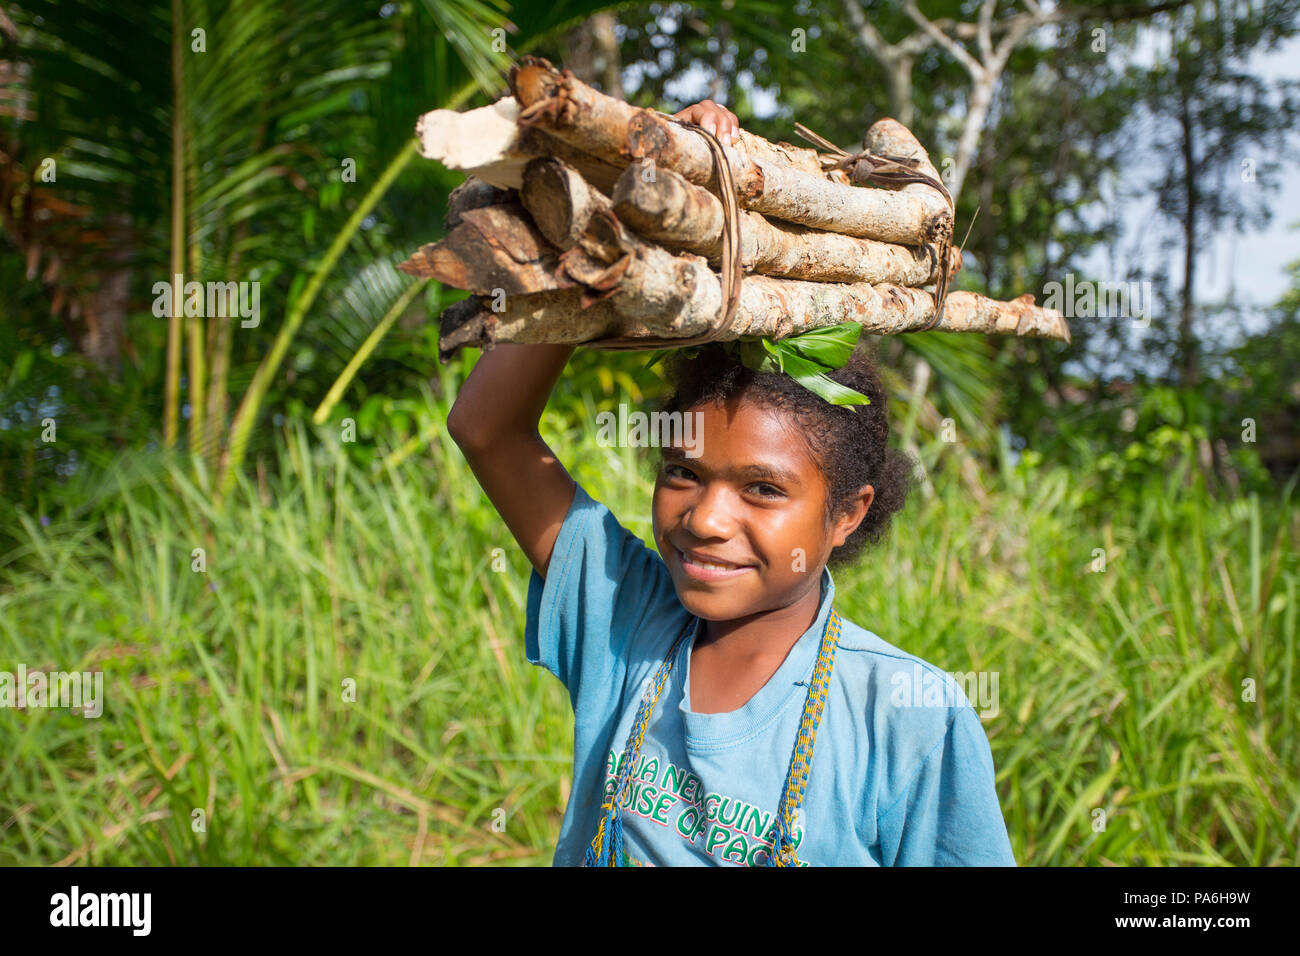 Women balancing sticks on her head - Papua New Guinea Stock Photo